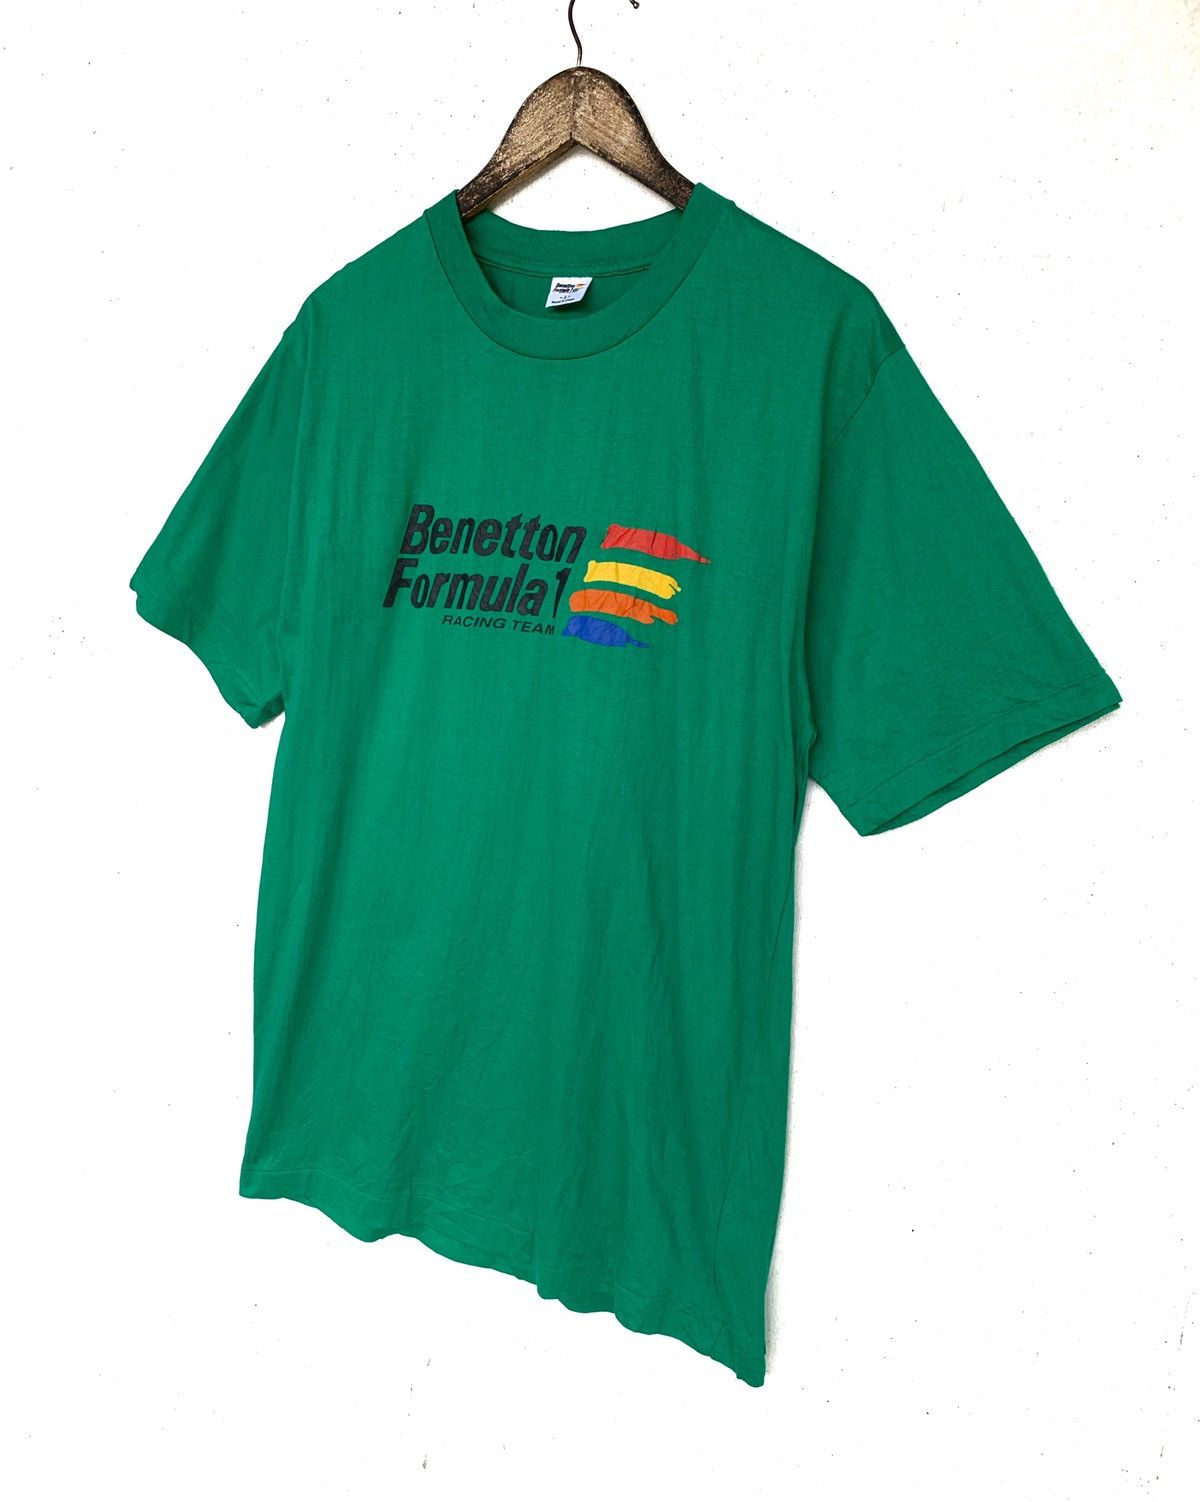 United Colors Of Benetton Benetton Formula 1 Racing Team Tshirt. | Grailed